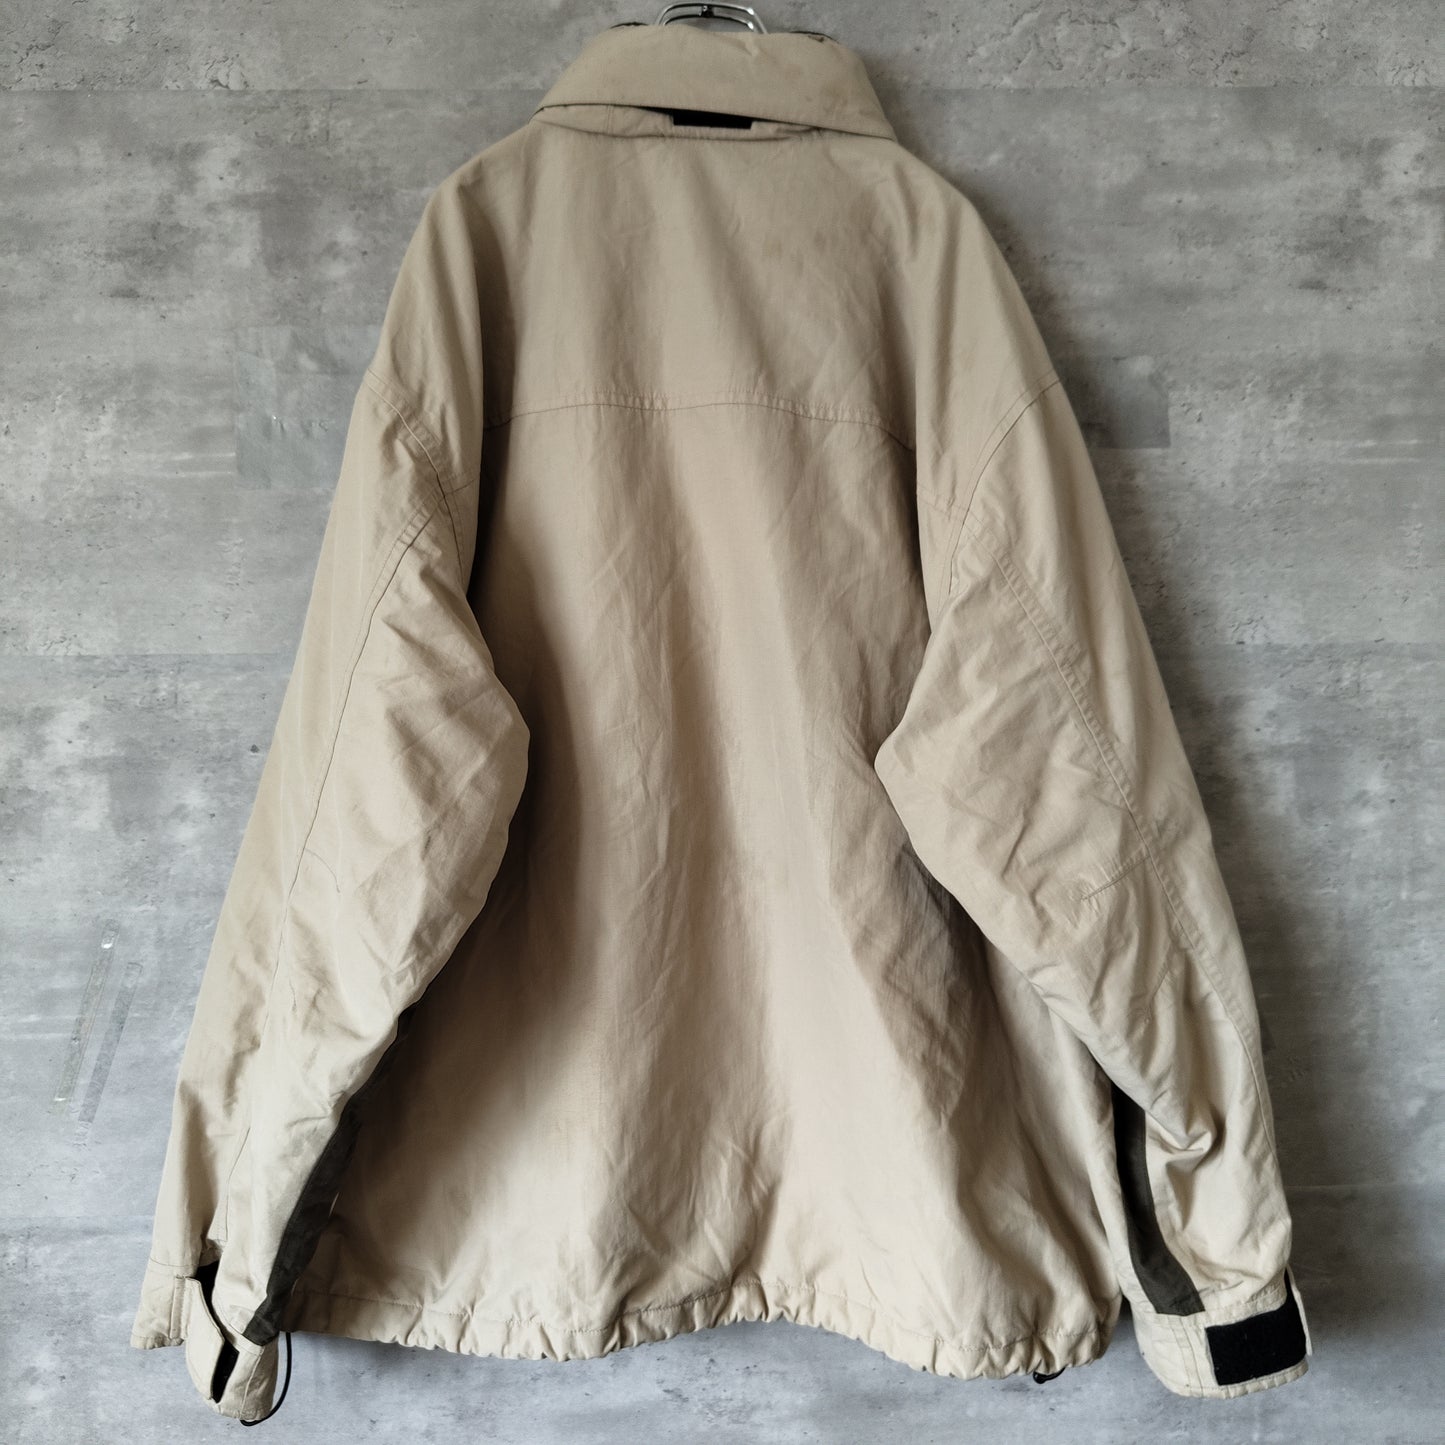 [EddieBouer] inner cotton nylon jacket